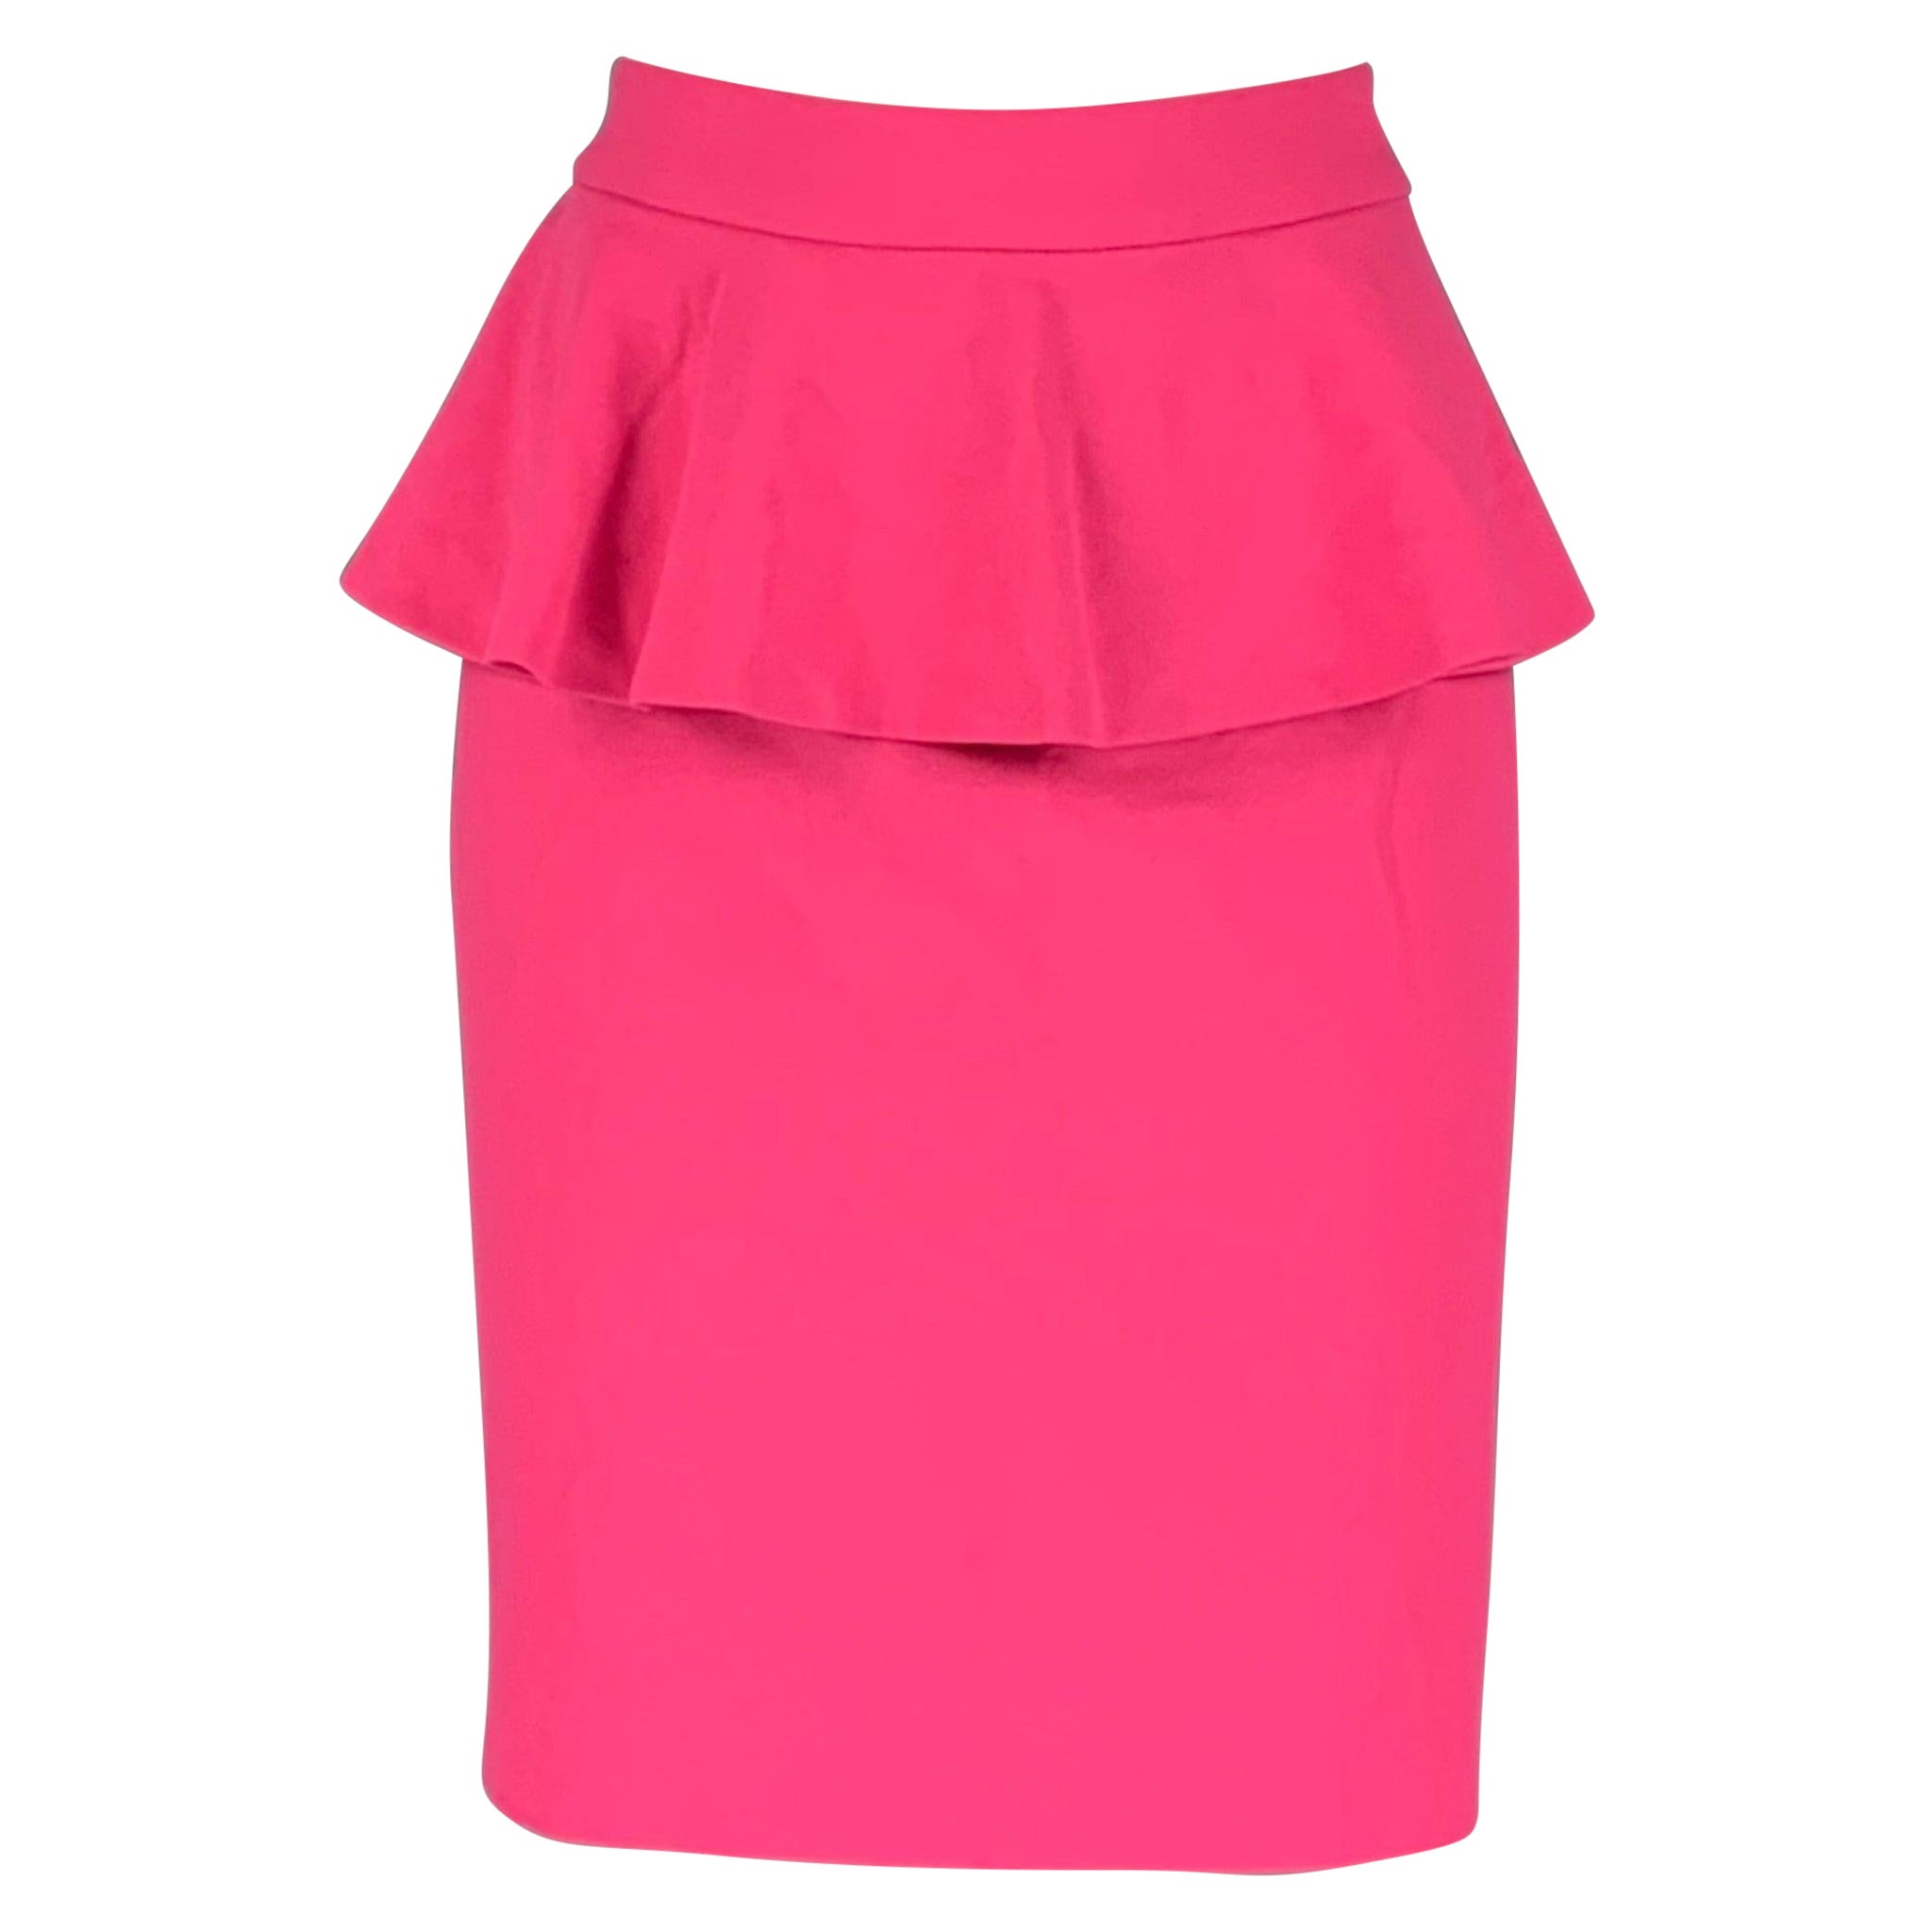 ALICE + OLIVIA Size 8 Pink Polyester Blend Solid Shift Skirt For Sale